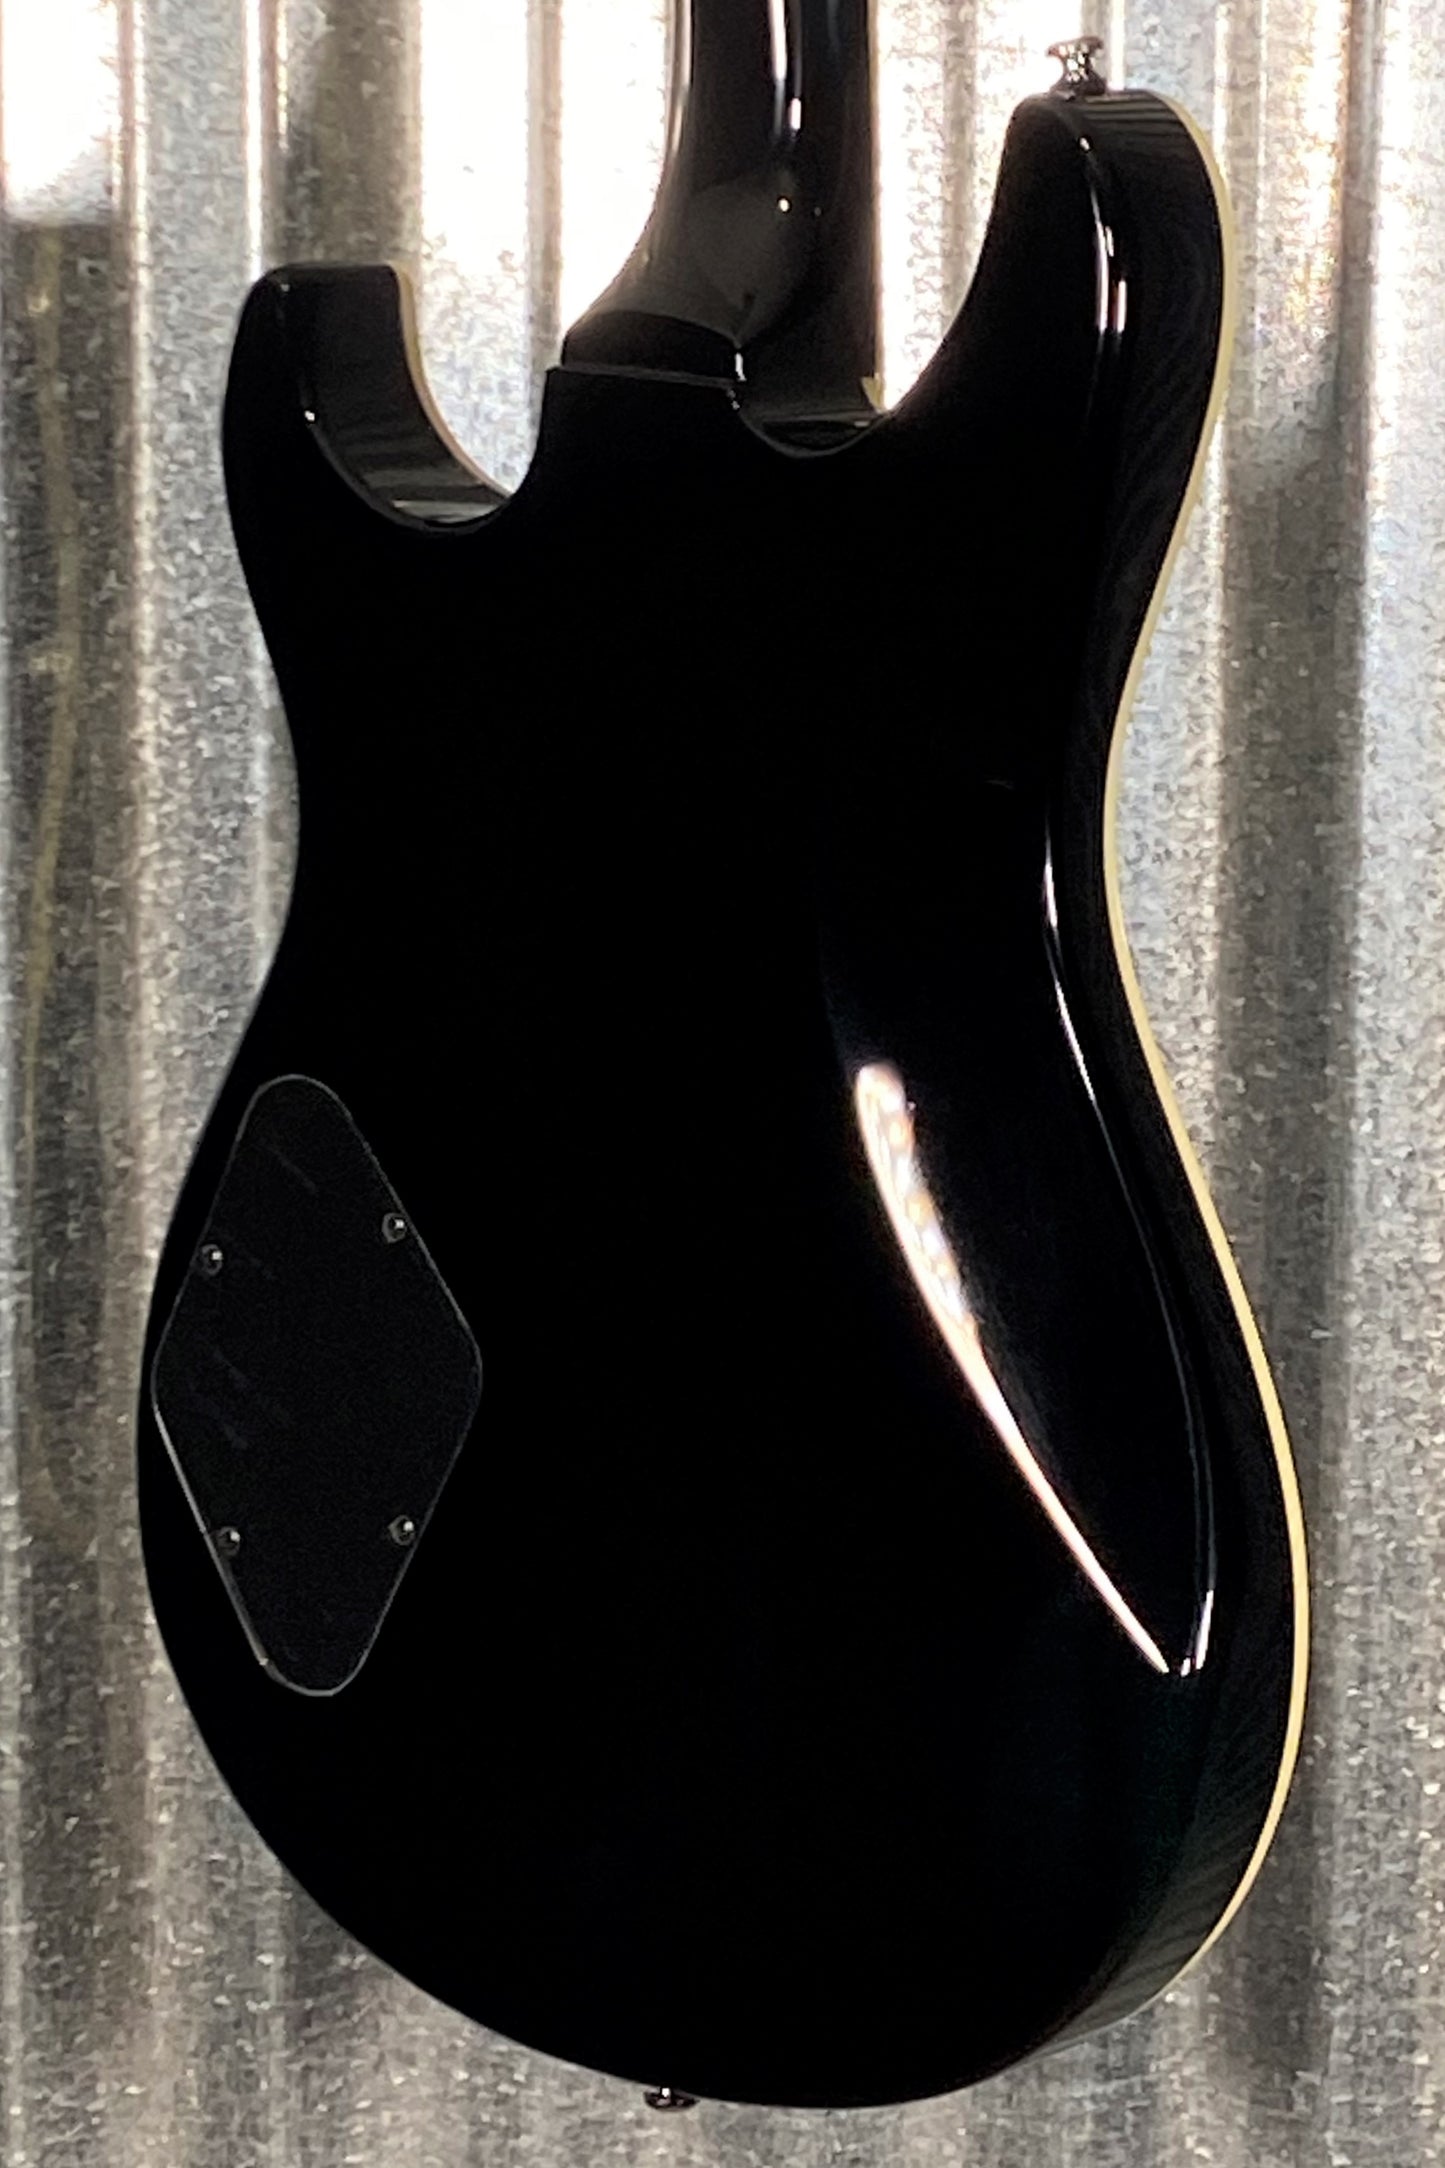 G&L Tribute Ascari GTS HB3 Transparent Black Guitar #1079 Used